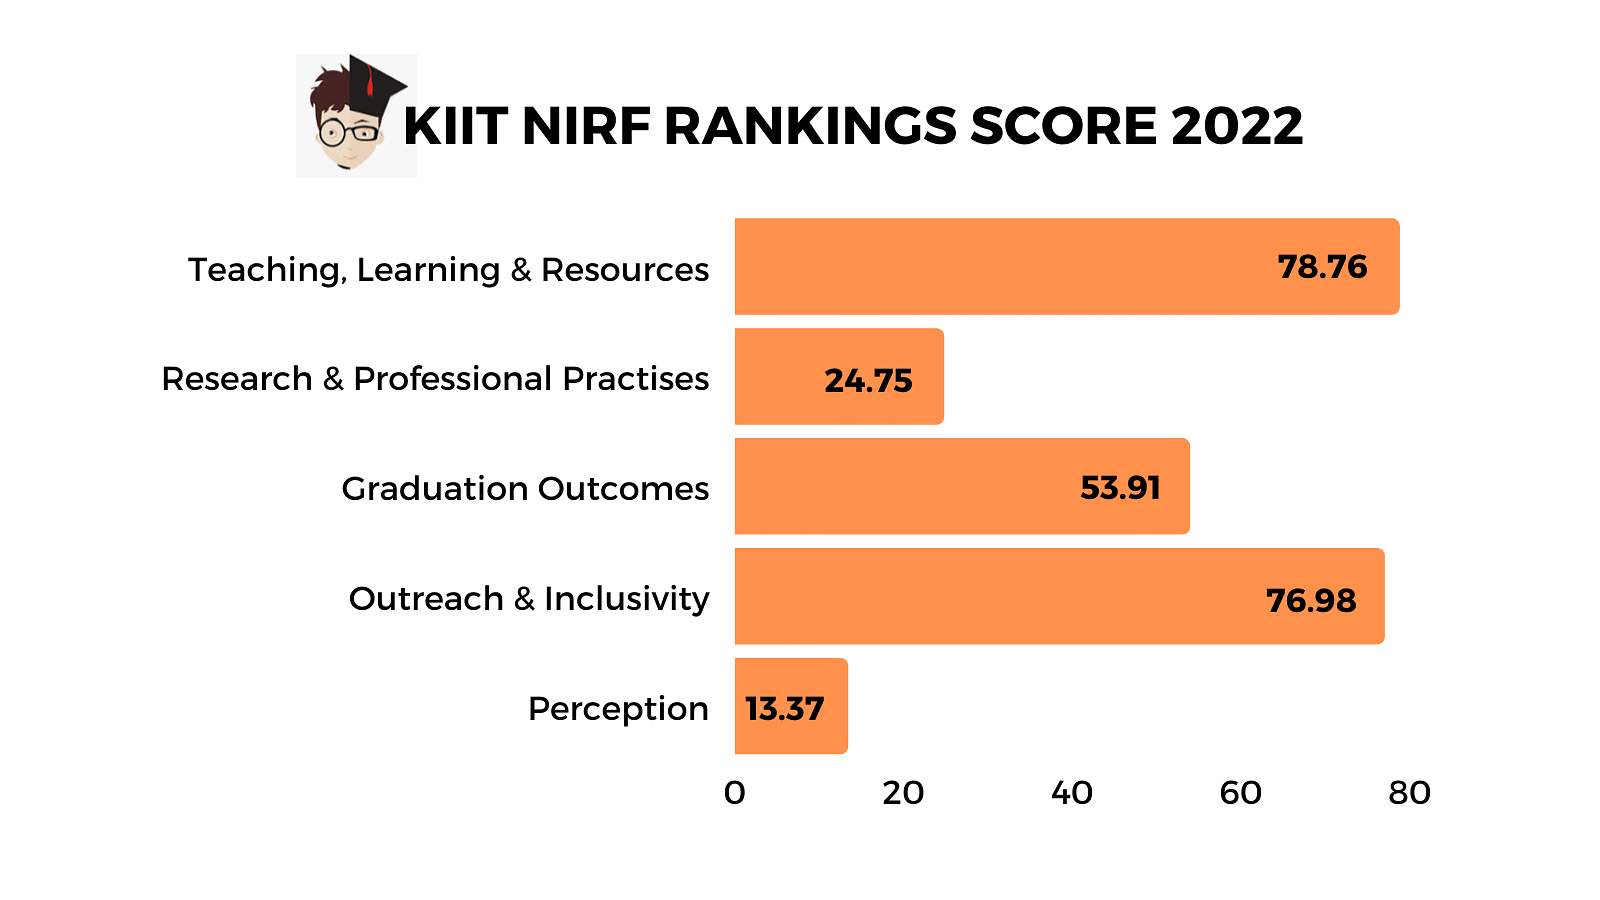 KIIT NIRF Rankings 2022 Scores